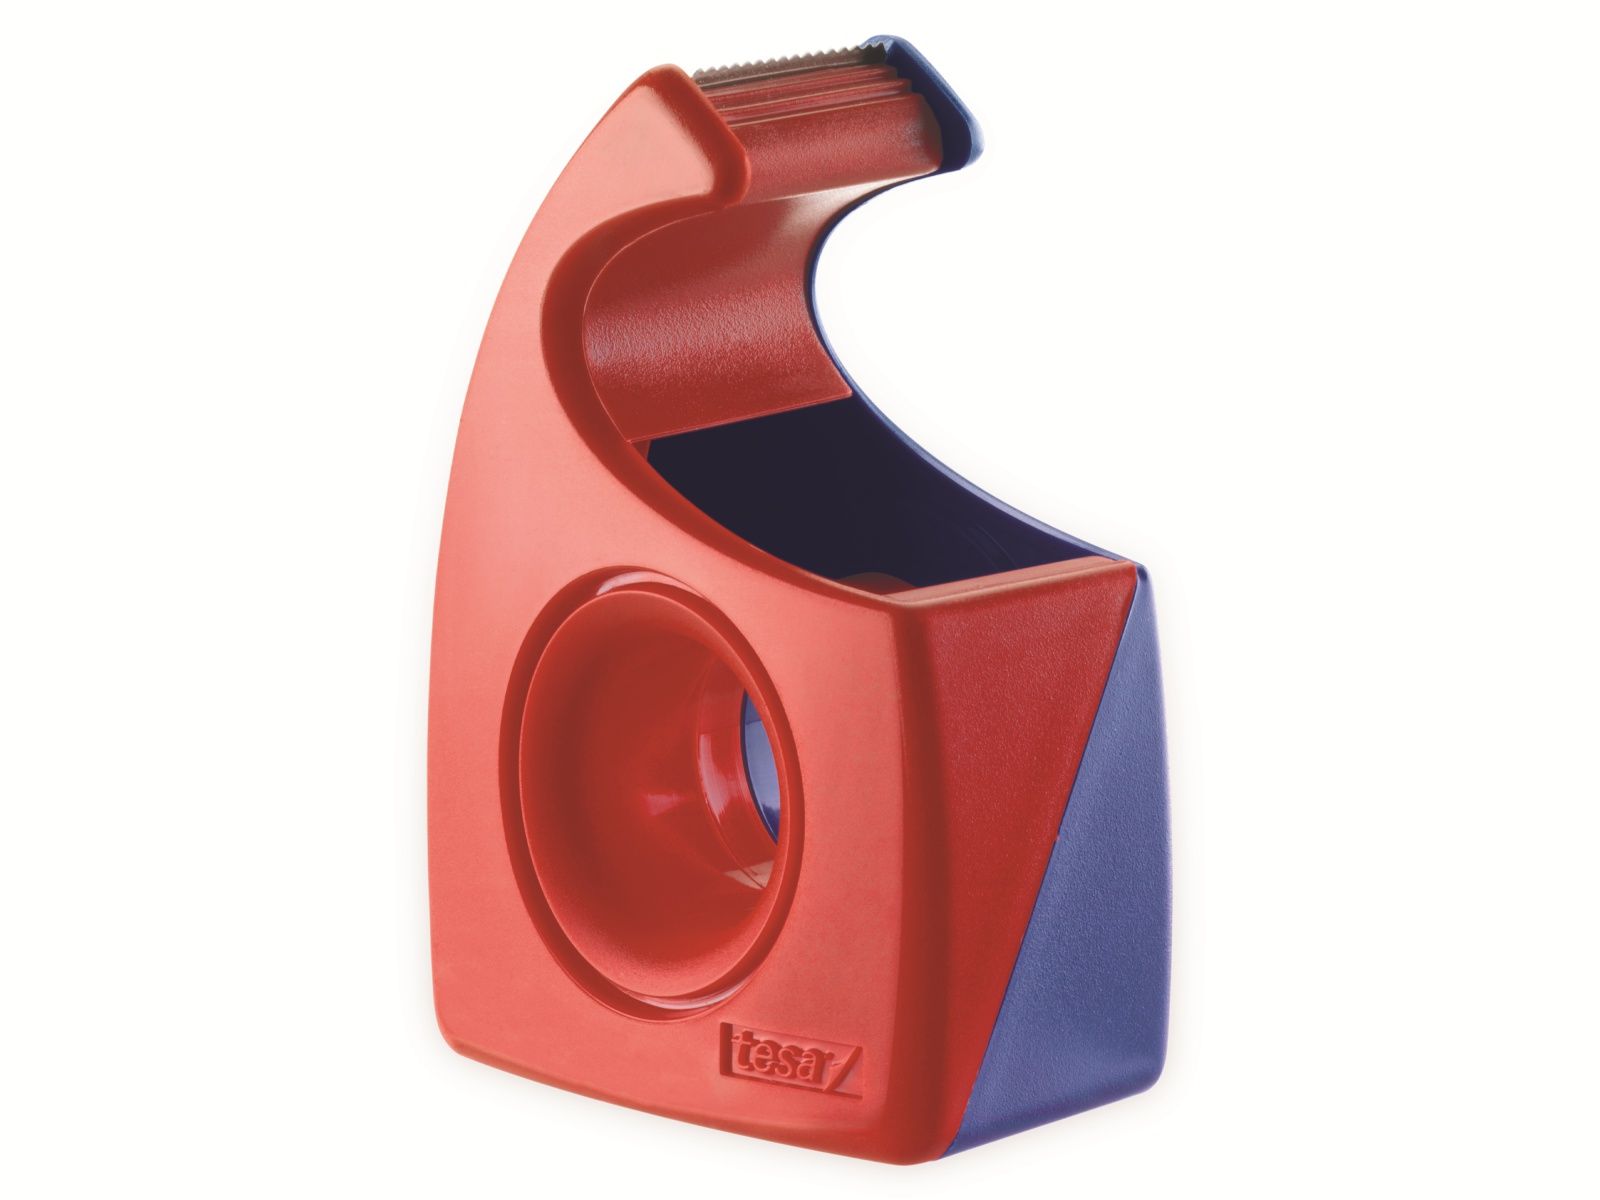 TESA ® Easy Cut Handabroller 10:19 rot-blau, leer, bis 10m:19mm, 57443-00001-01 von Tesa